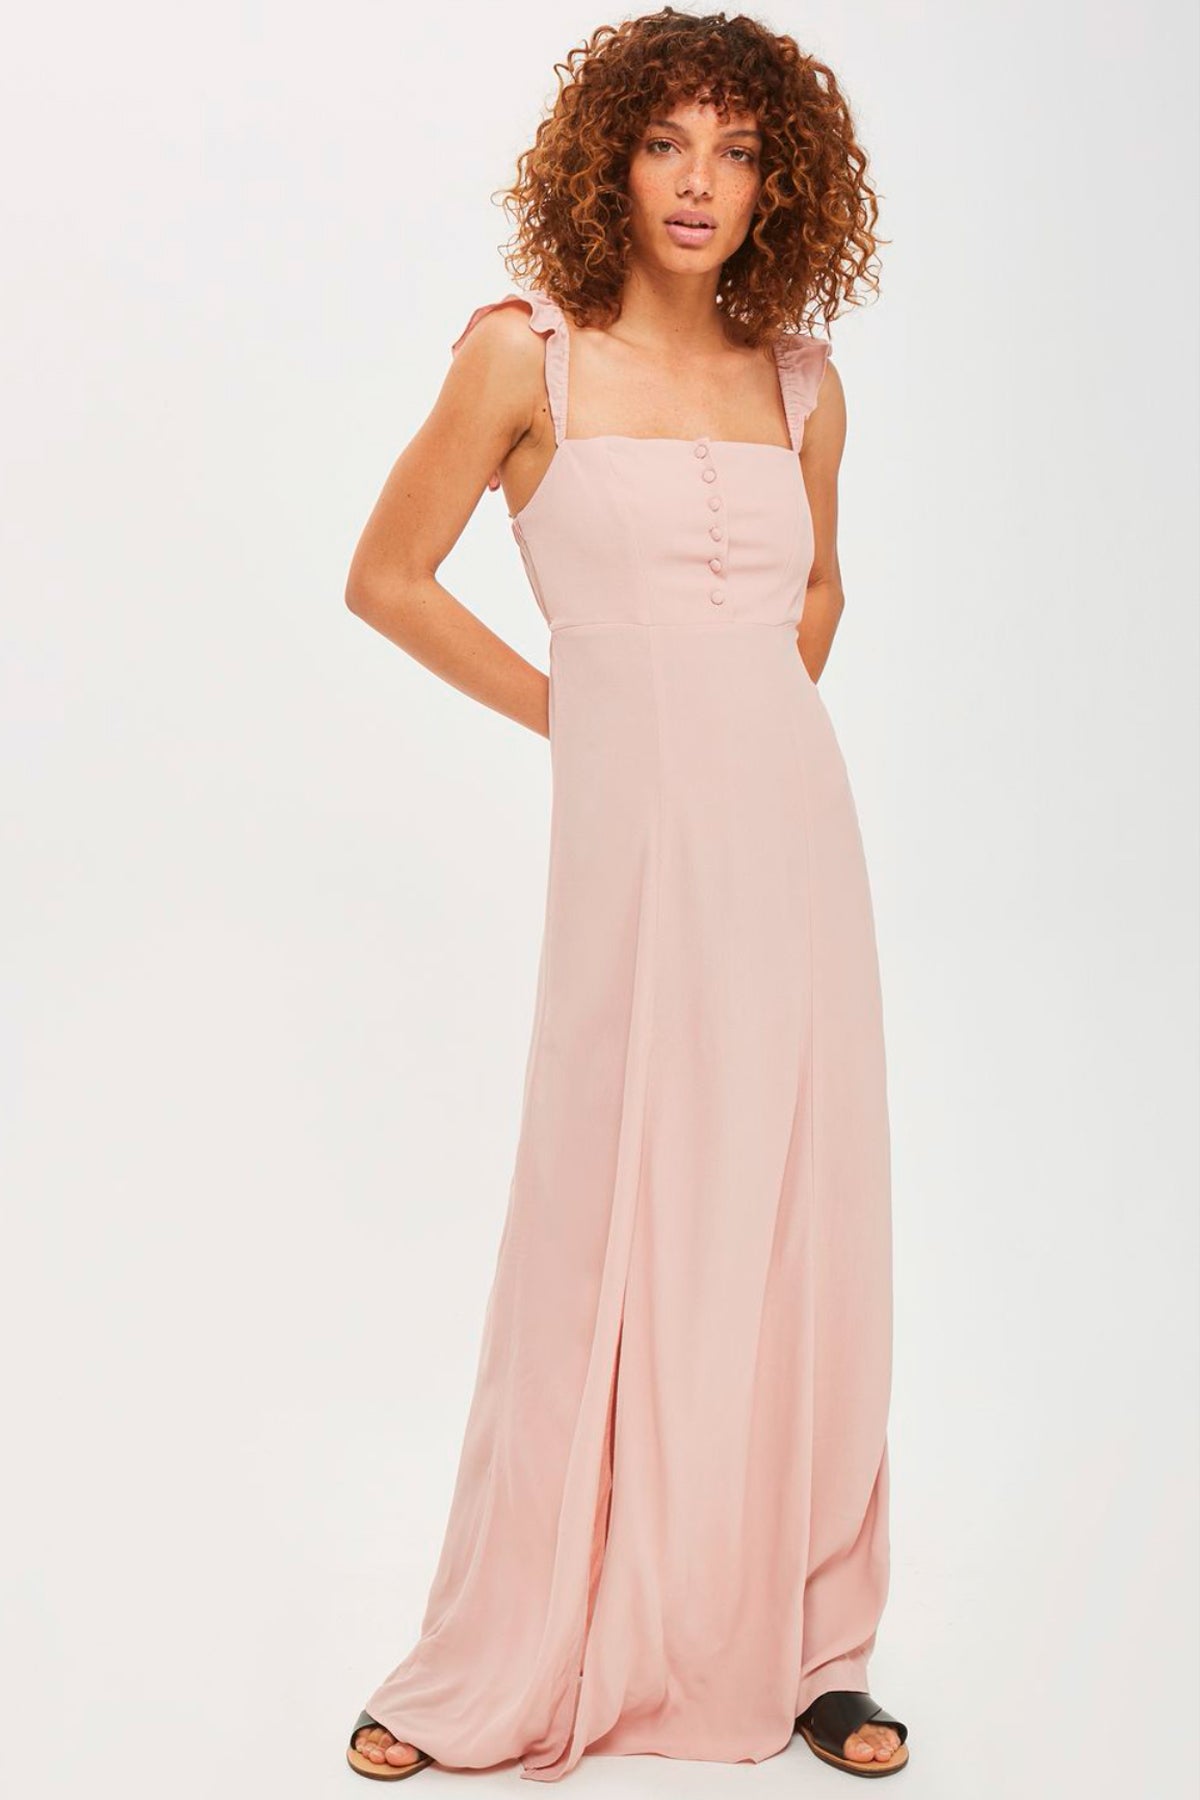 Flynn Skye Bardot Light Pink Maxi Dress